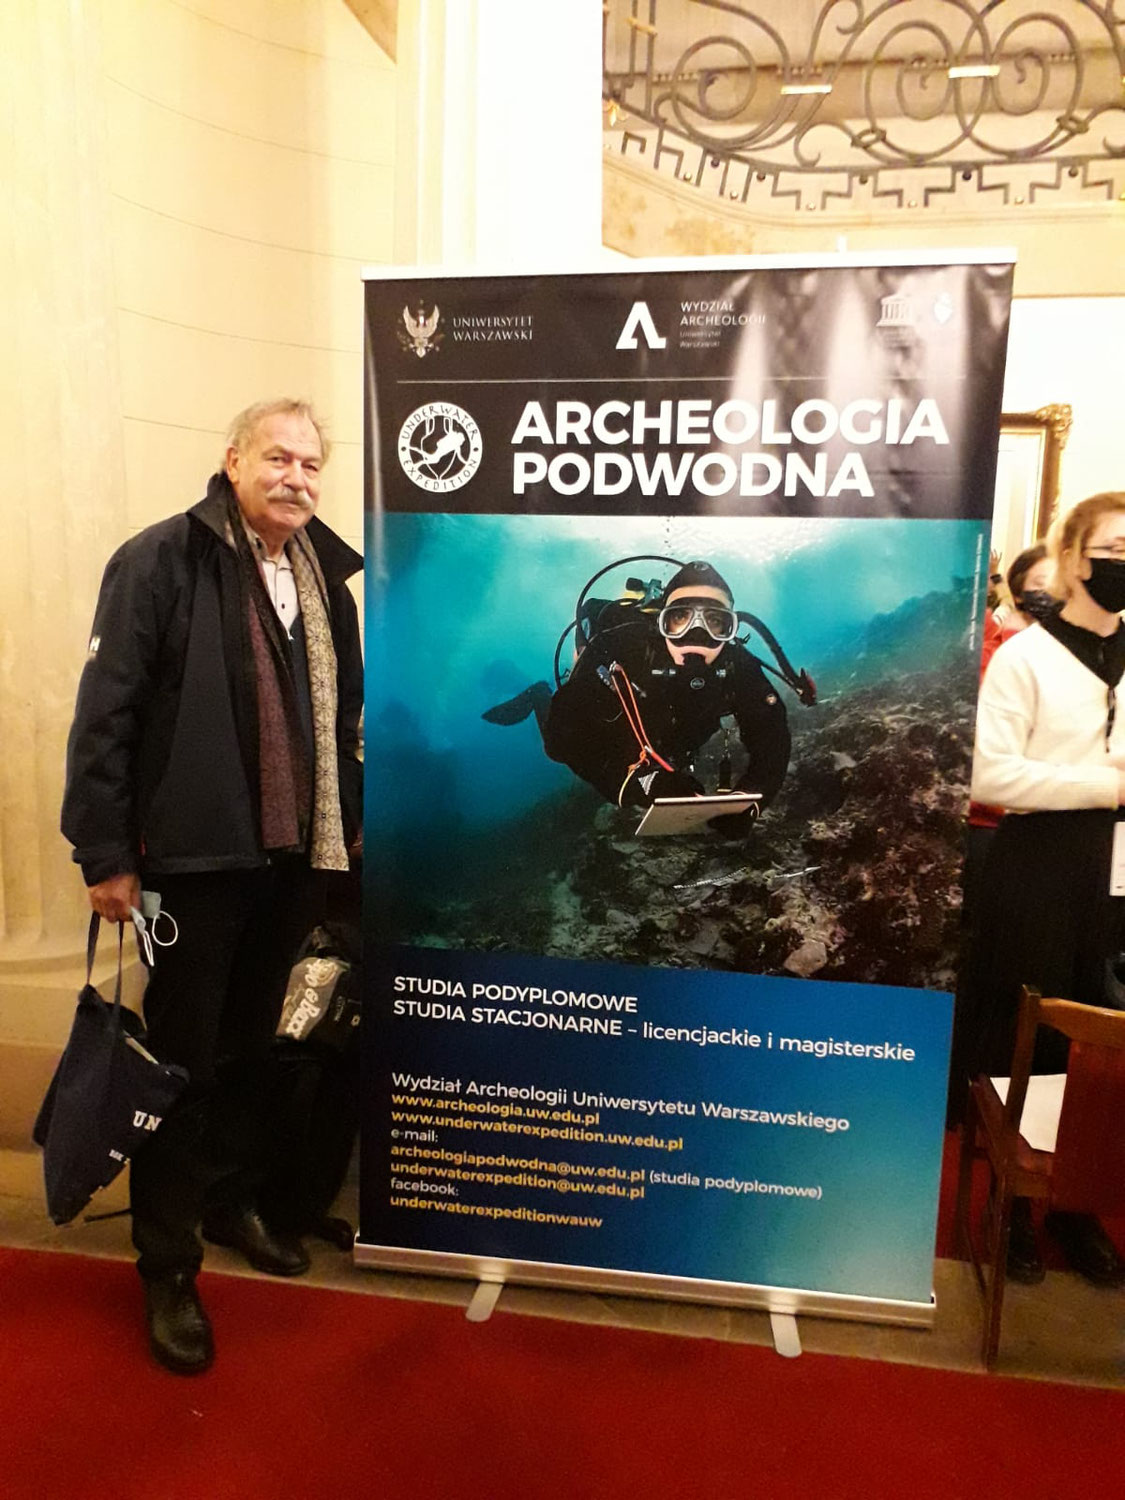 Visit to Poland Archaeology Seminar